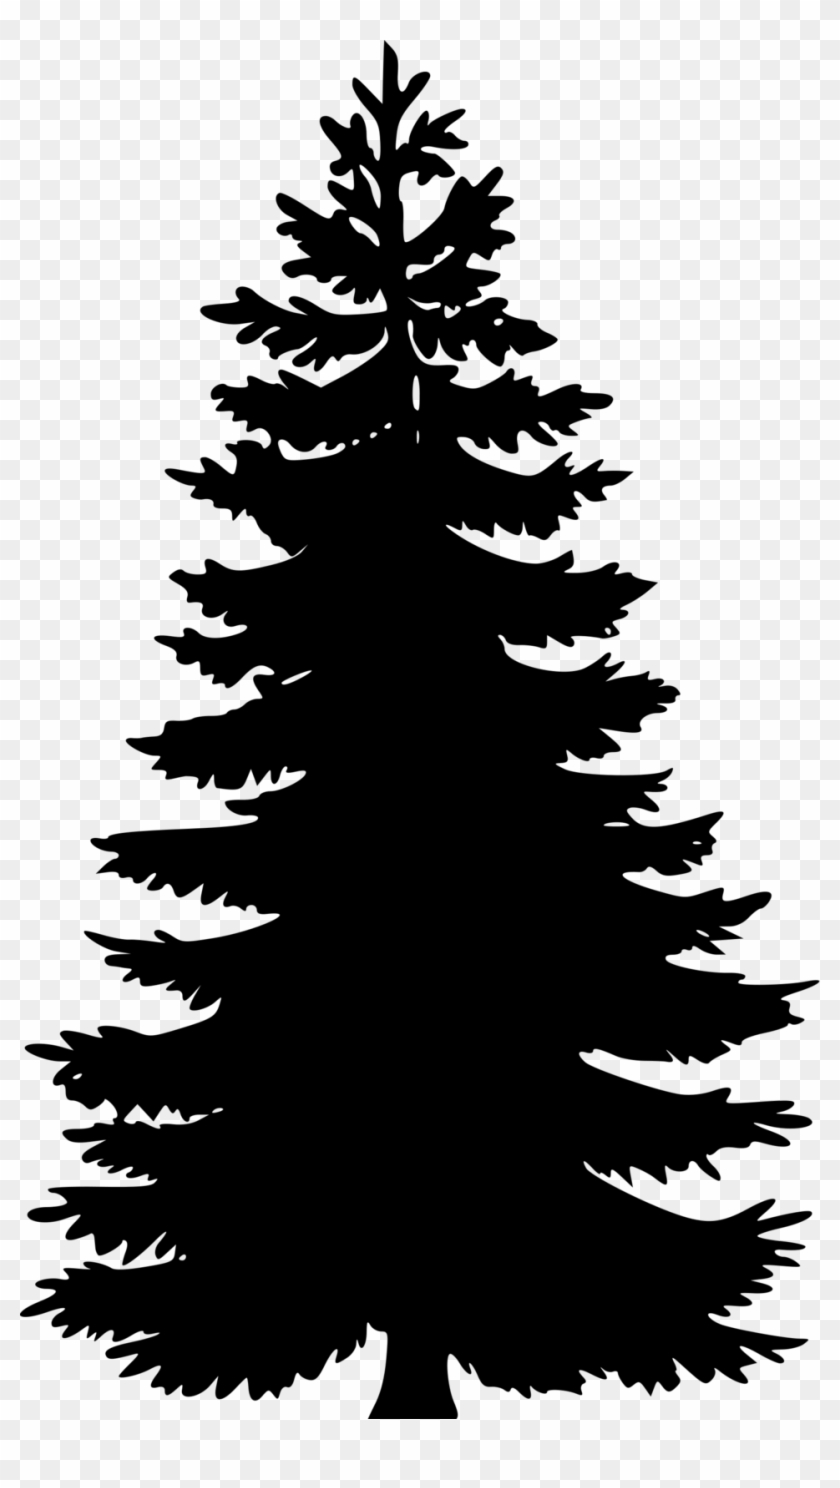 Download Clip Art Charlie Brown Christmas Tree - Pine Tree Vector ...